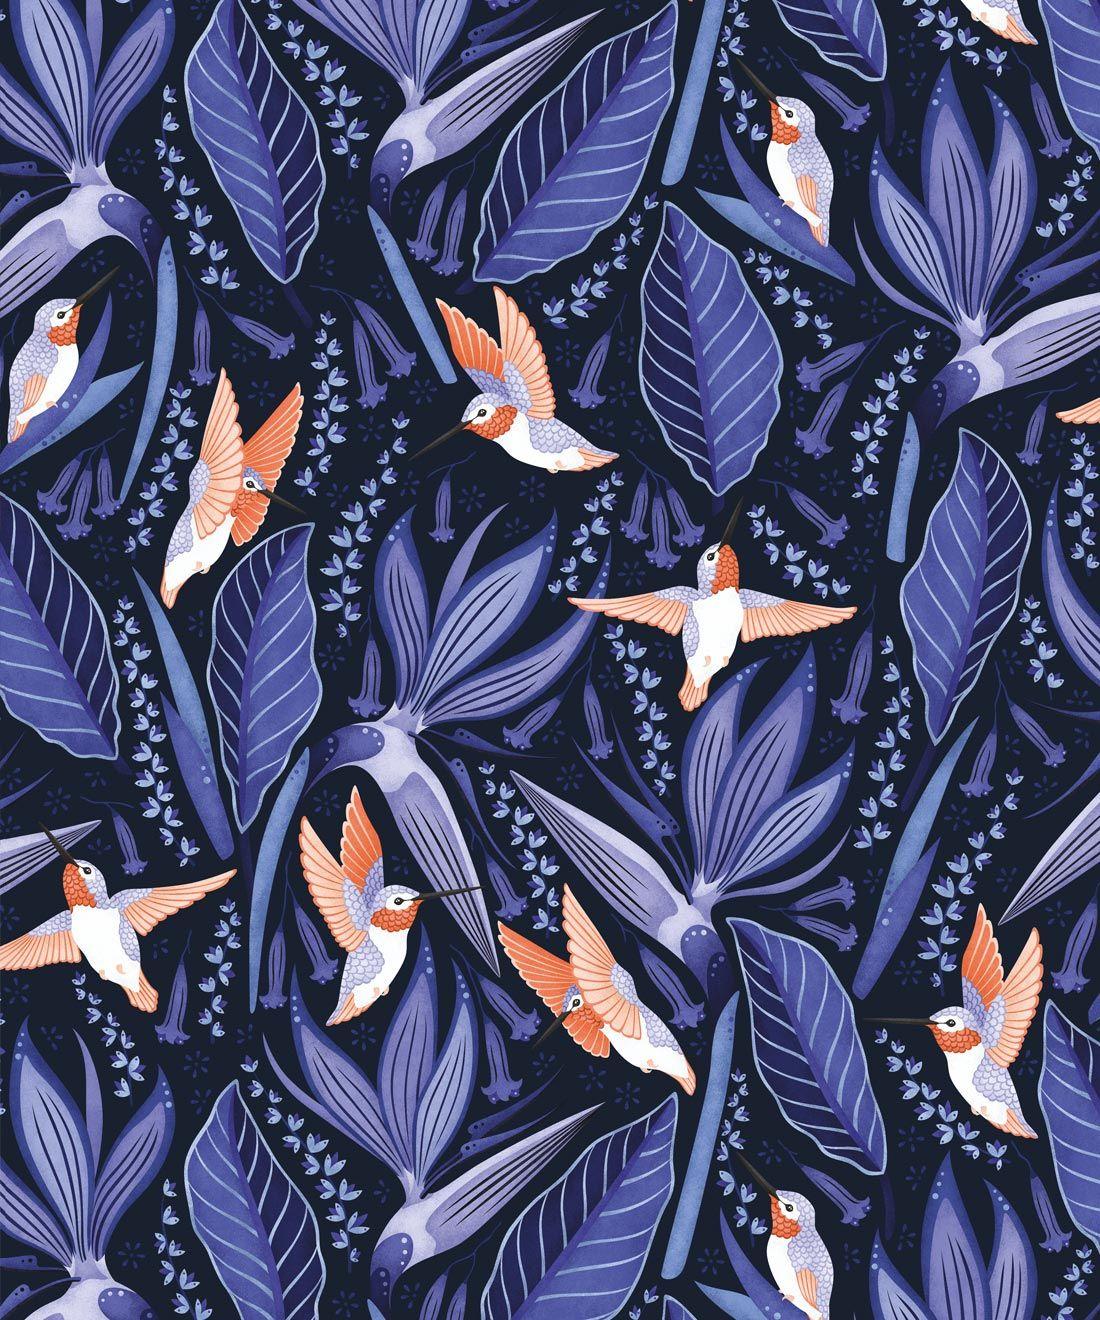 Hummingbirds Wallpapers - Top Free Hummingbirds Backgrounds ...